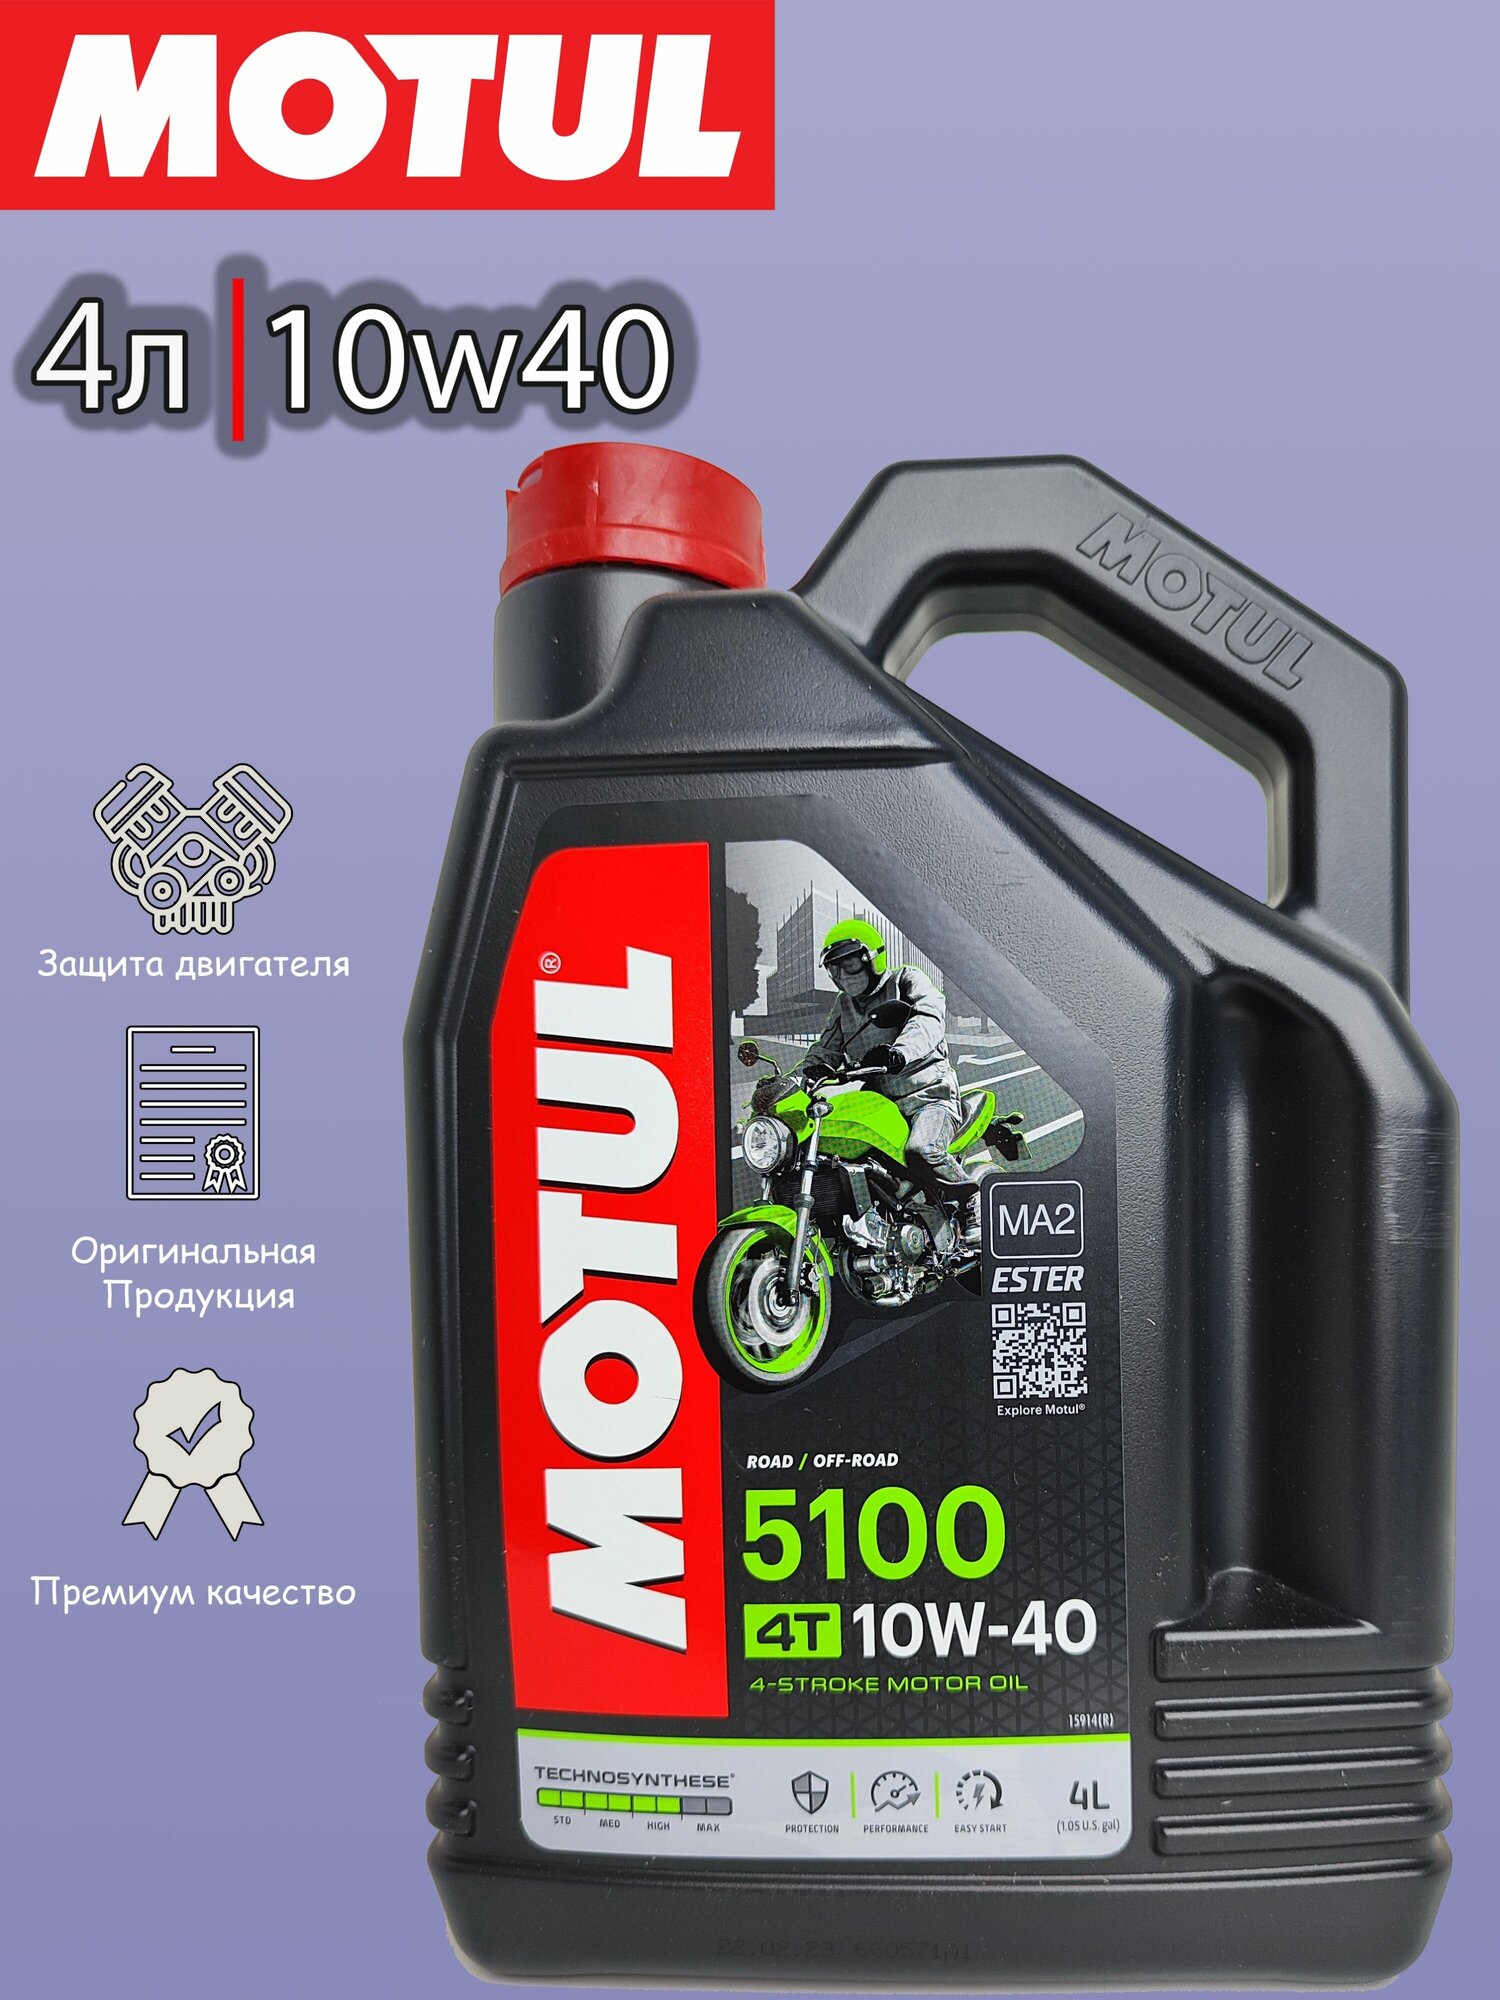 Моторное масло Motul - фото №12